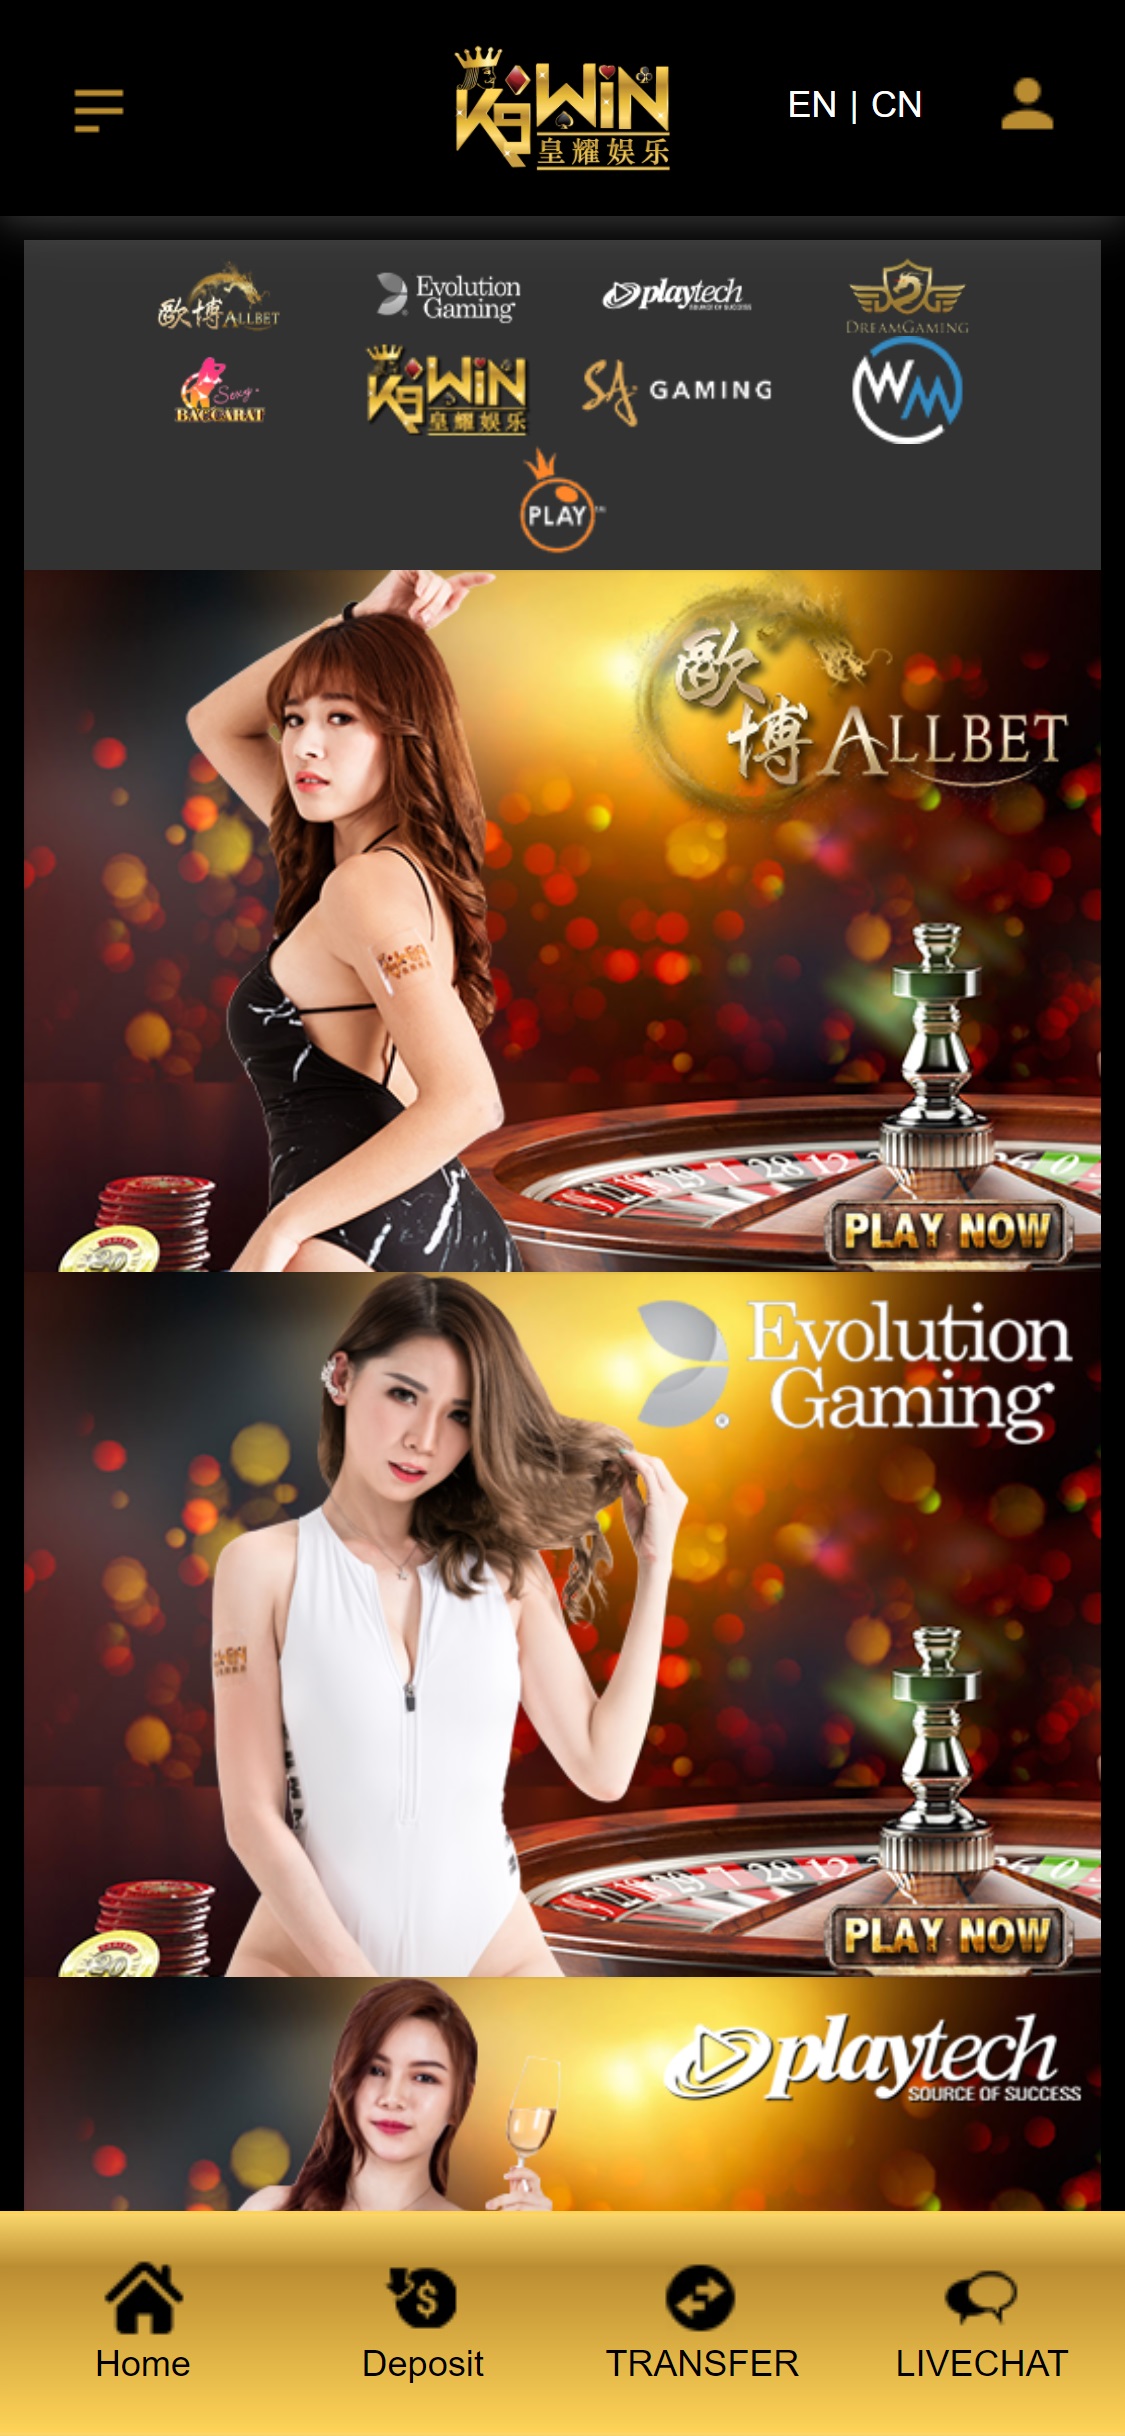 K9WIN Online Casino Mobile Live Dealer Games Review